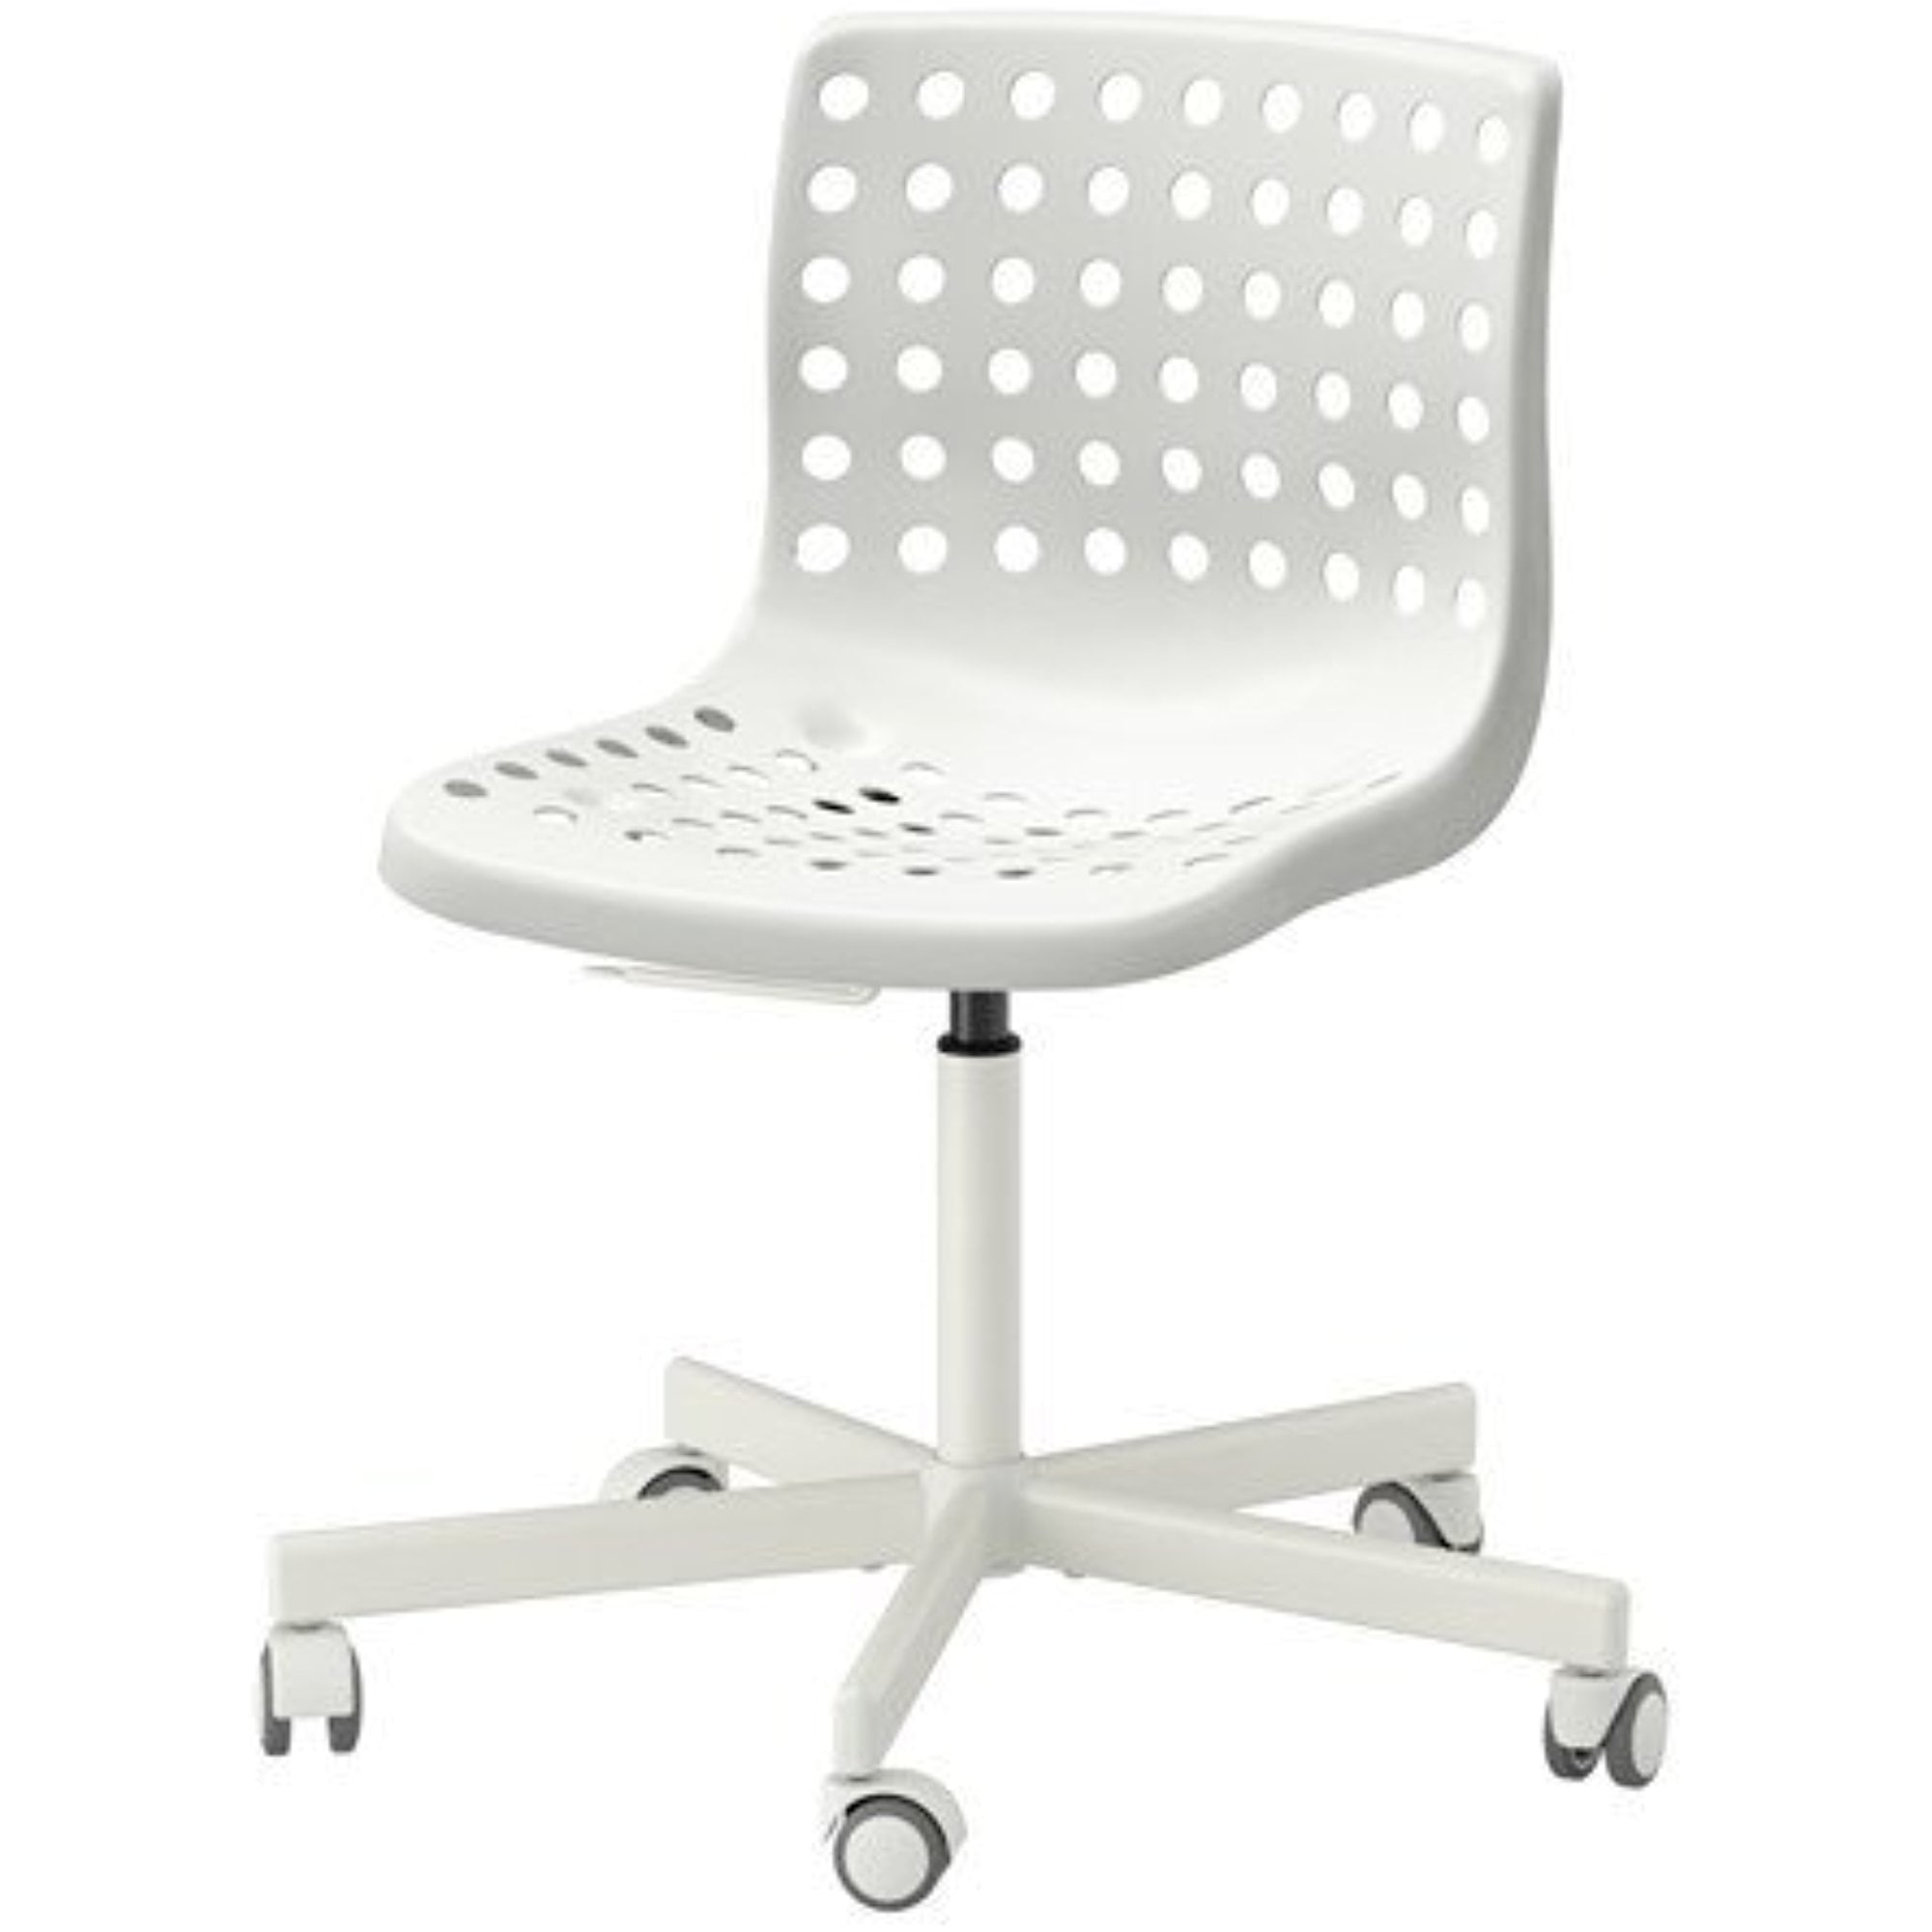 Sporren Swivel Chair White, White Vanity Chair Ikea